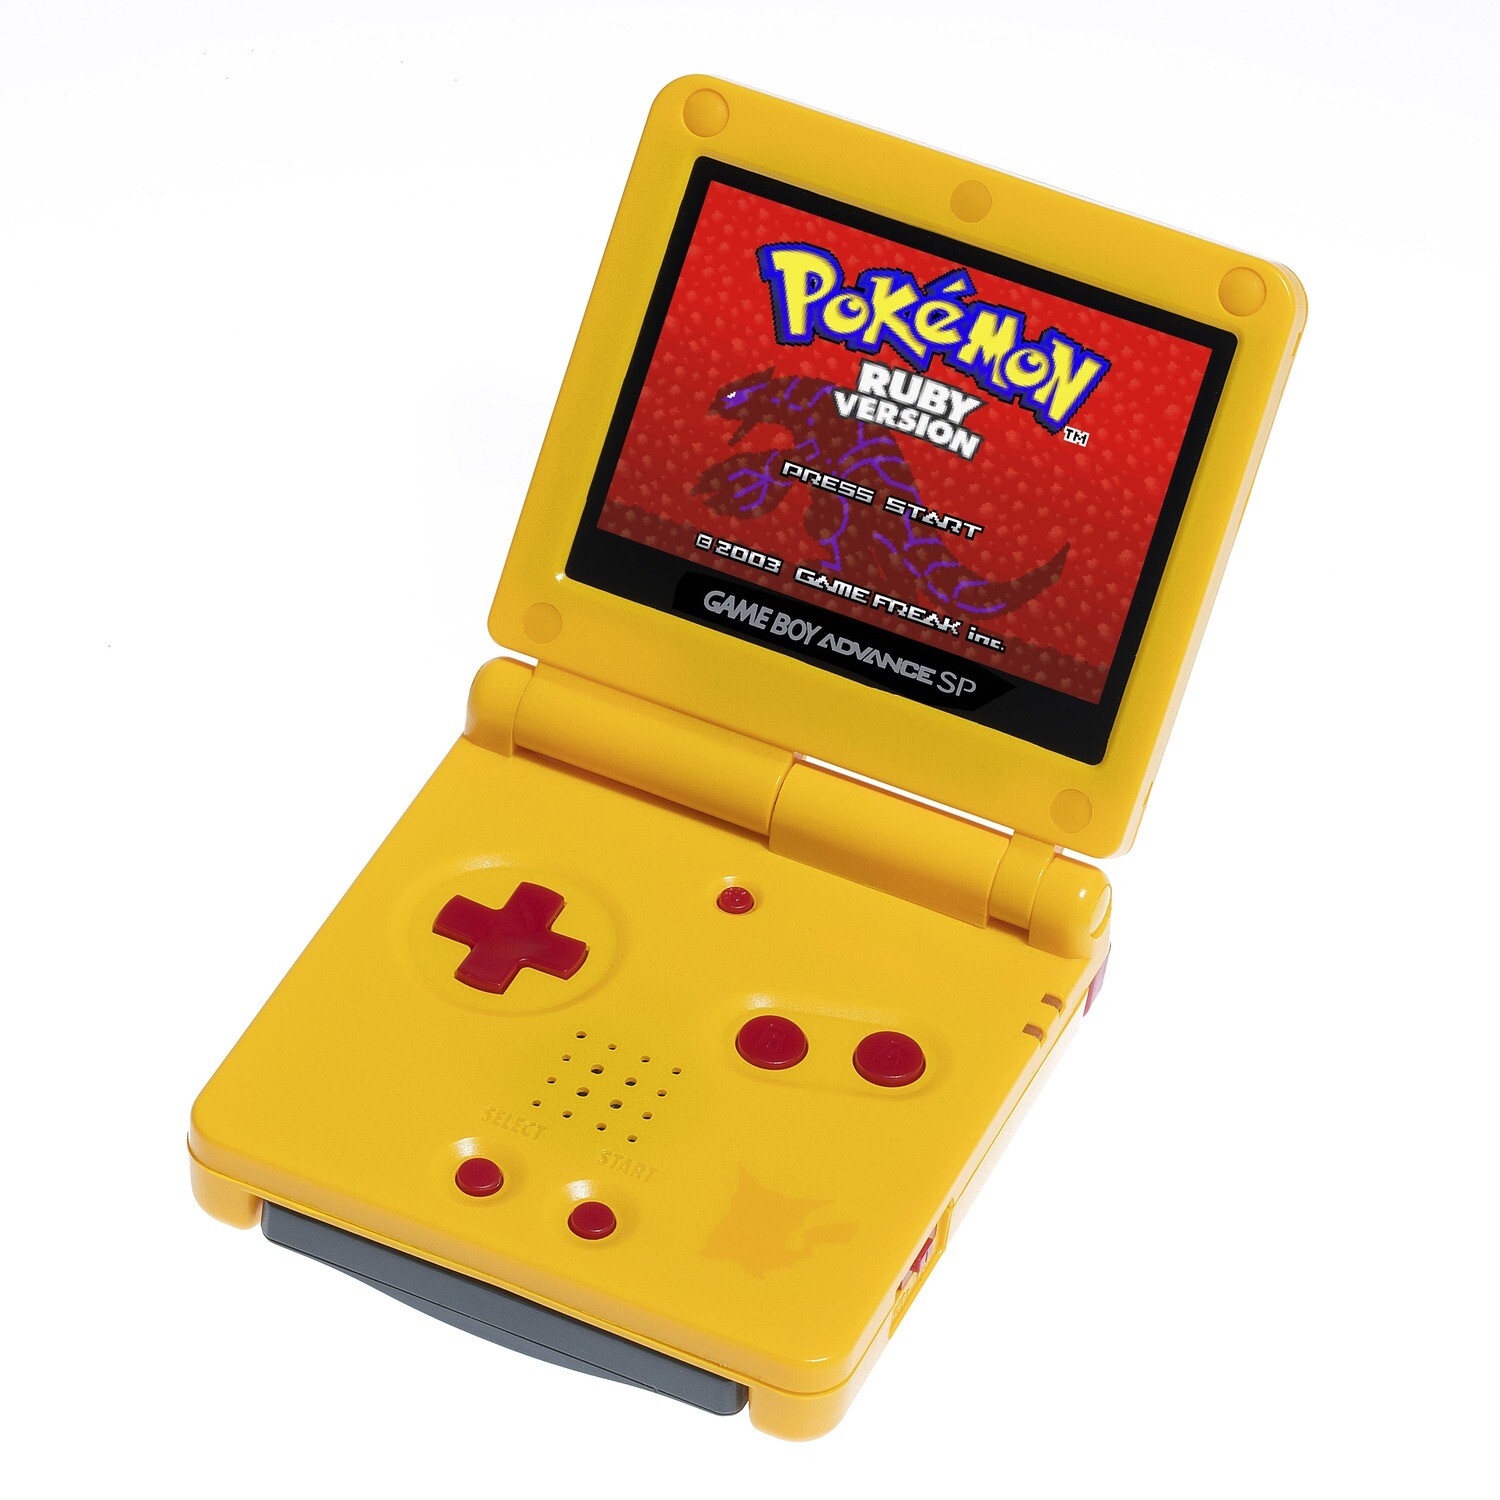 Game Boy Advance SP Console: Prestige Edition (Pikachu Yellow)